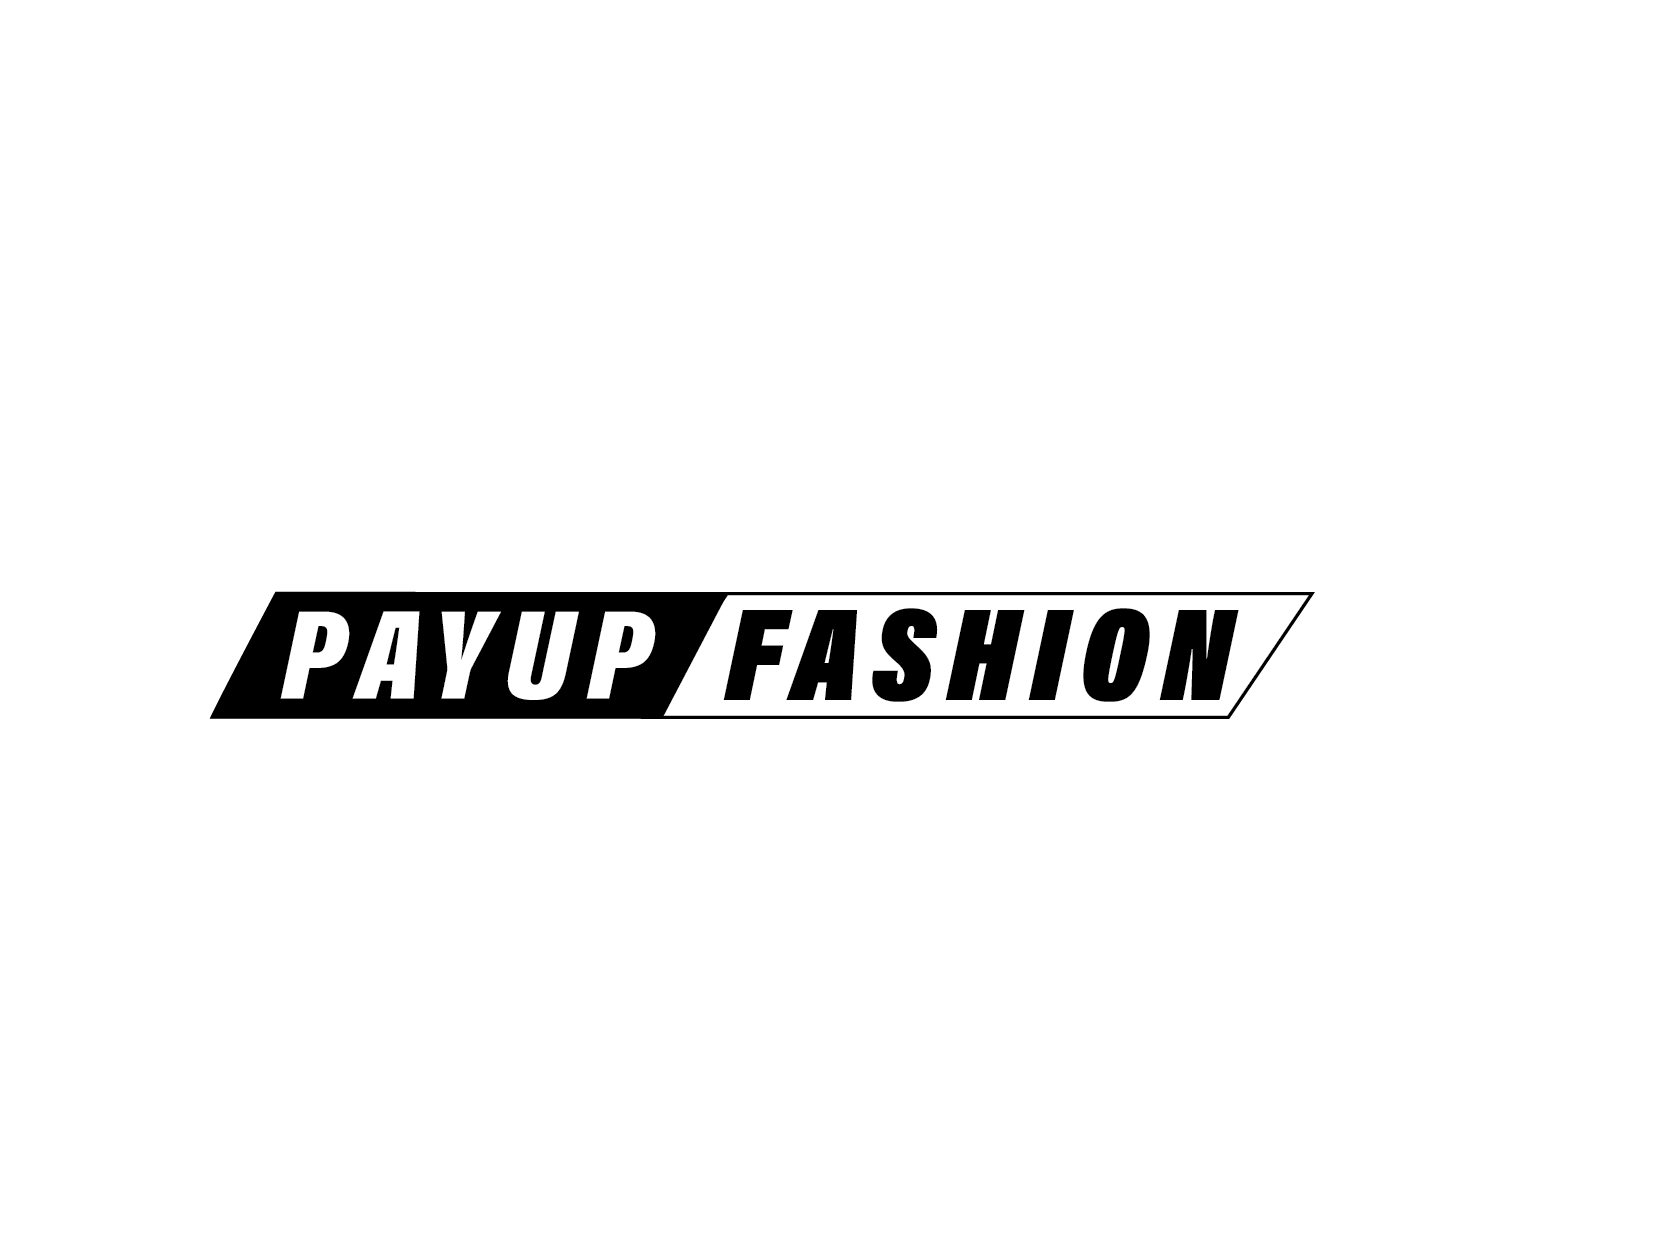 Pay Up Fashion logo.png